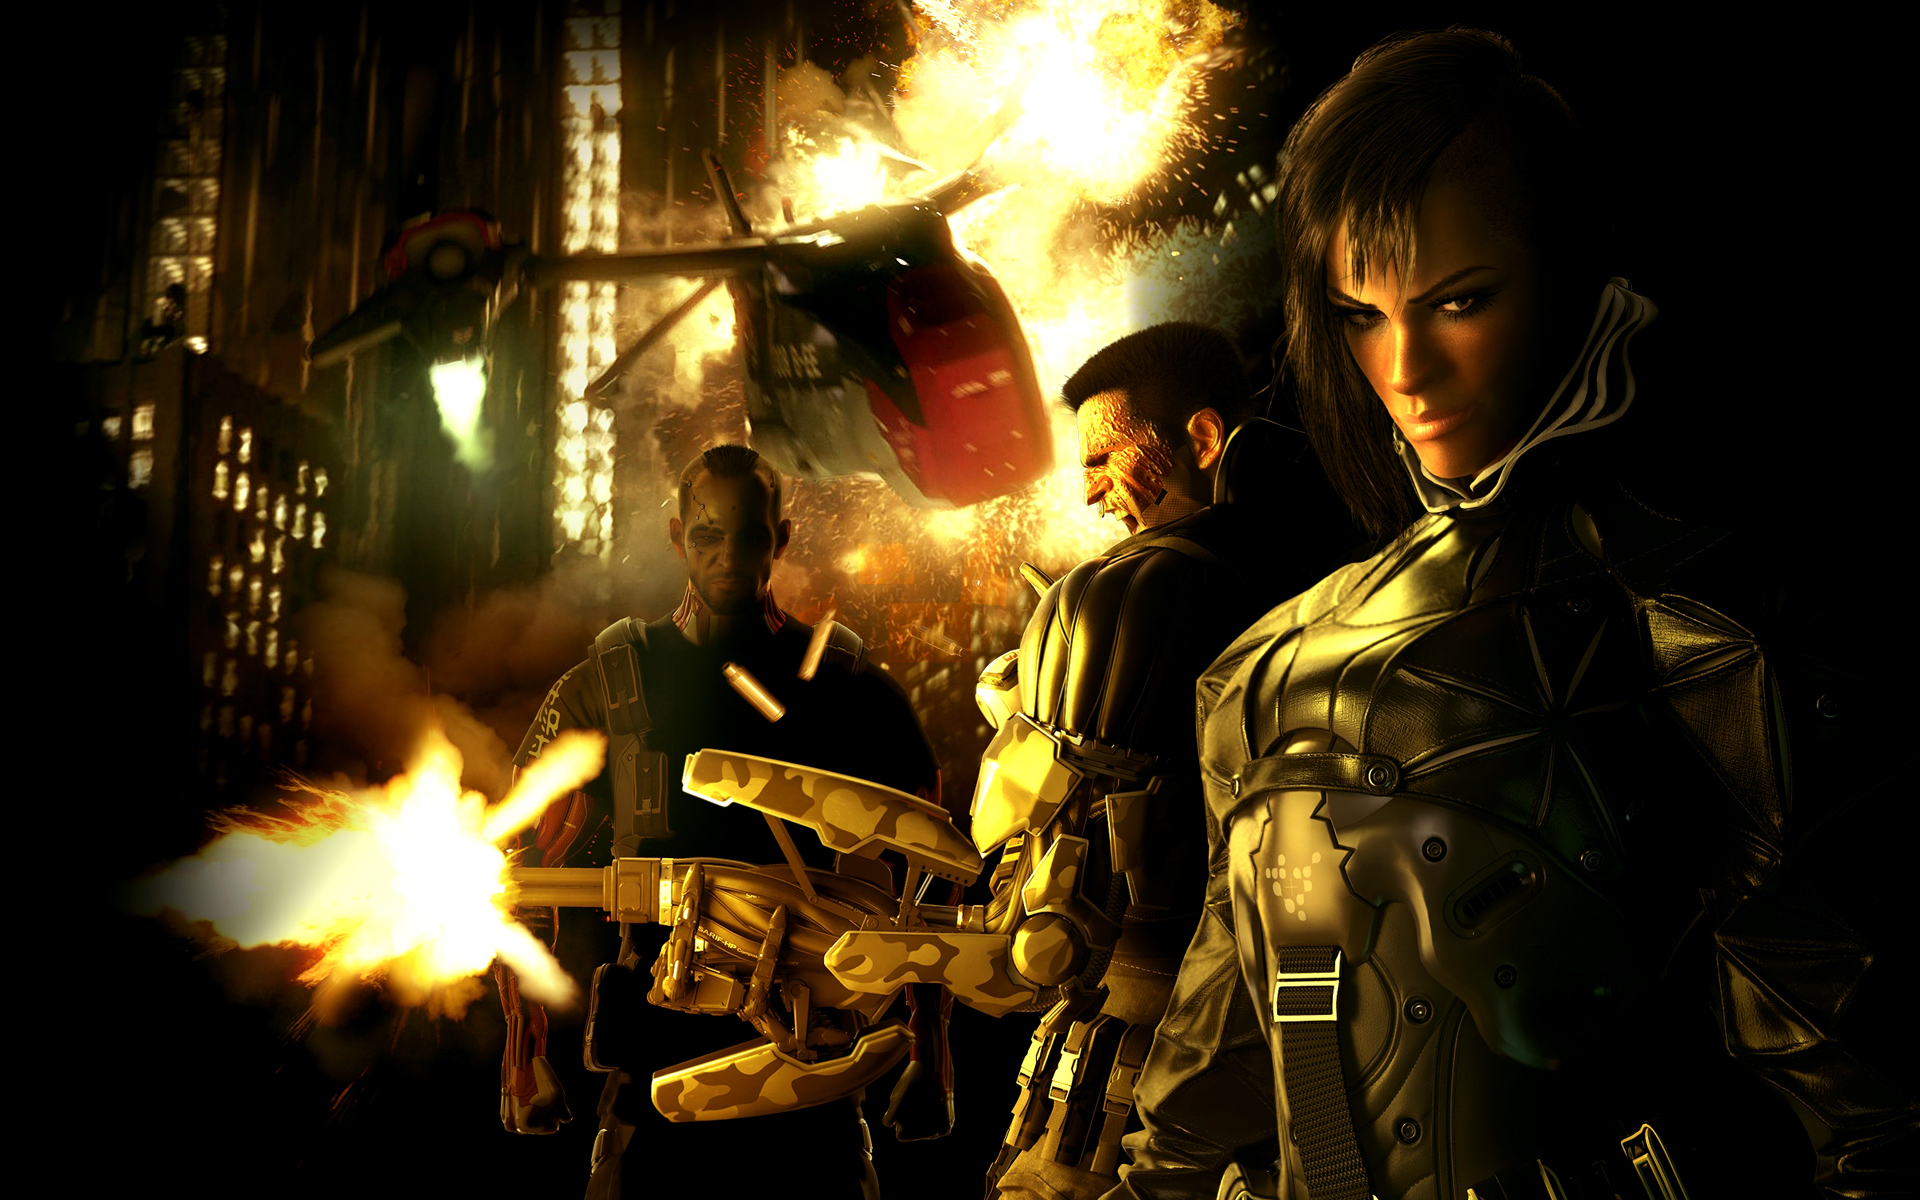 Deus Ex: Human Revolution Wallpapers